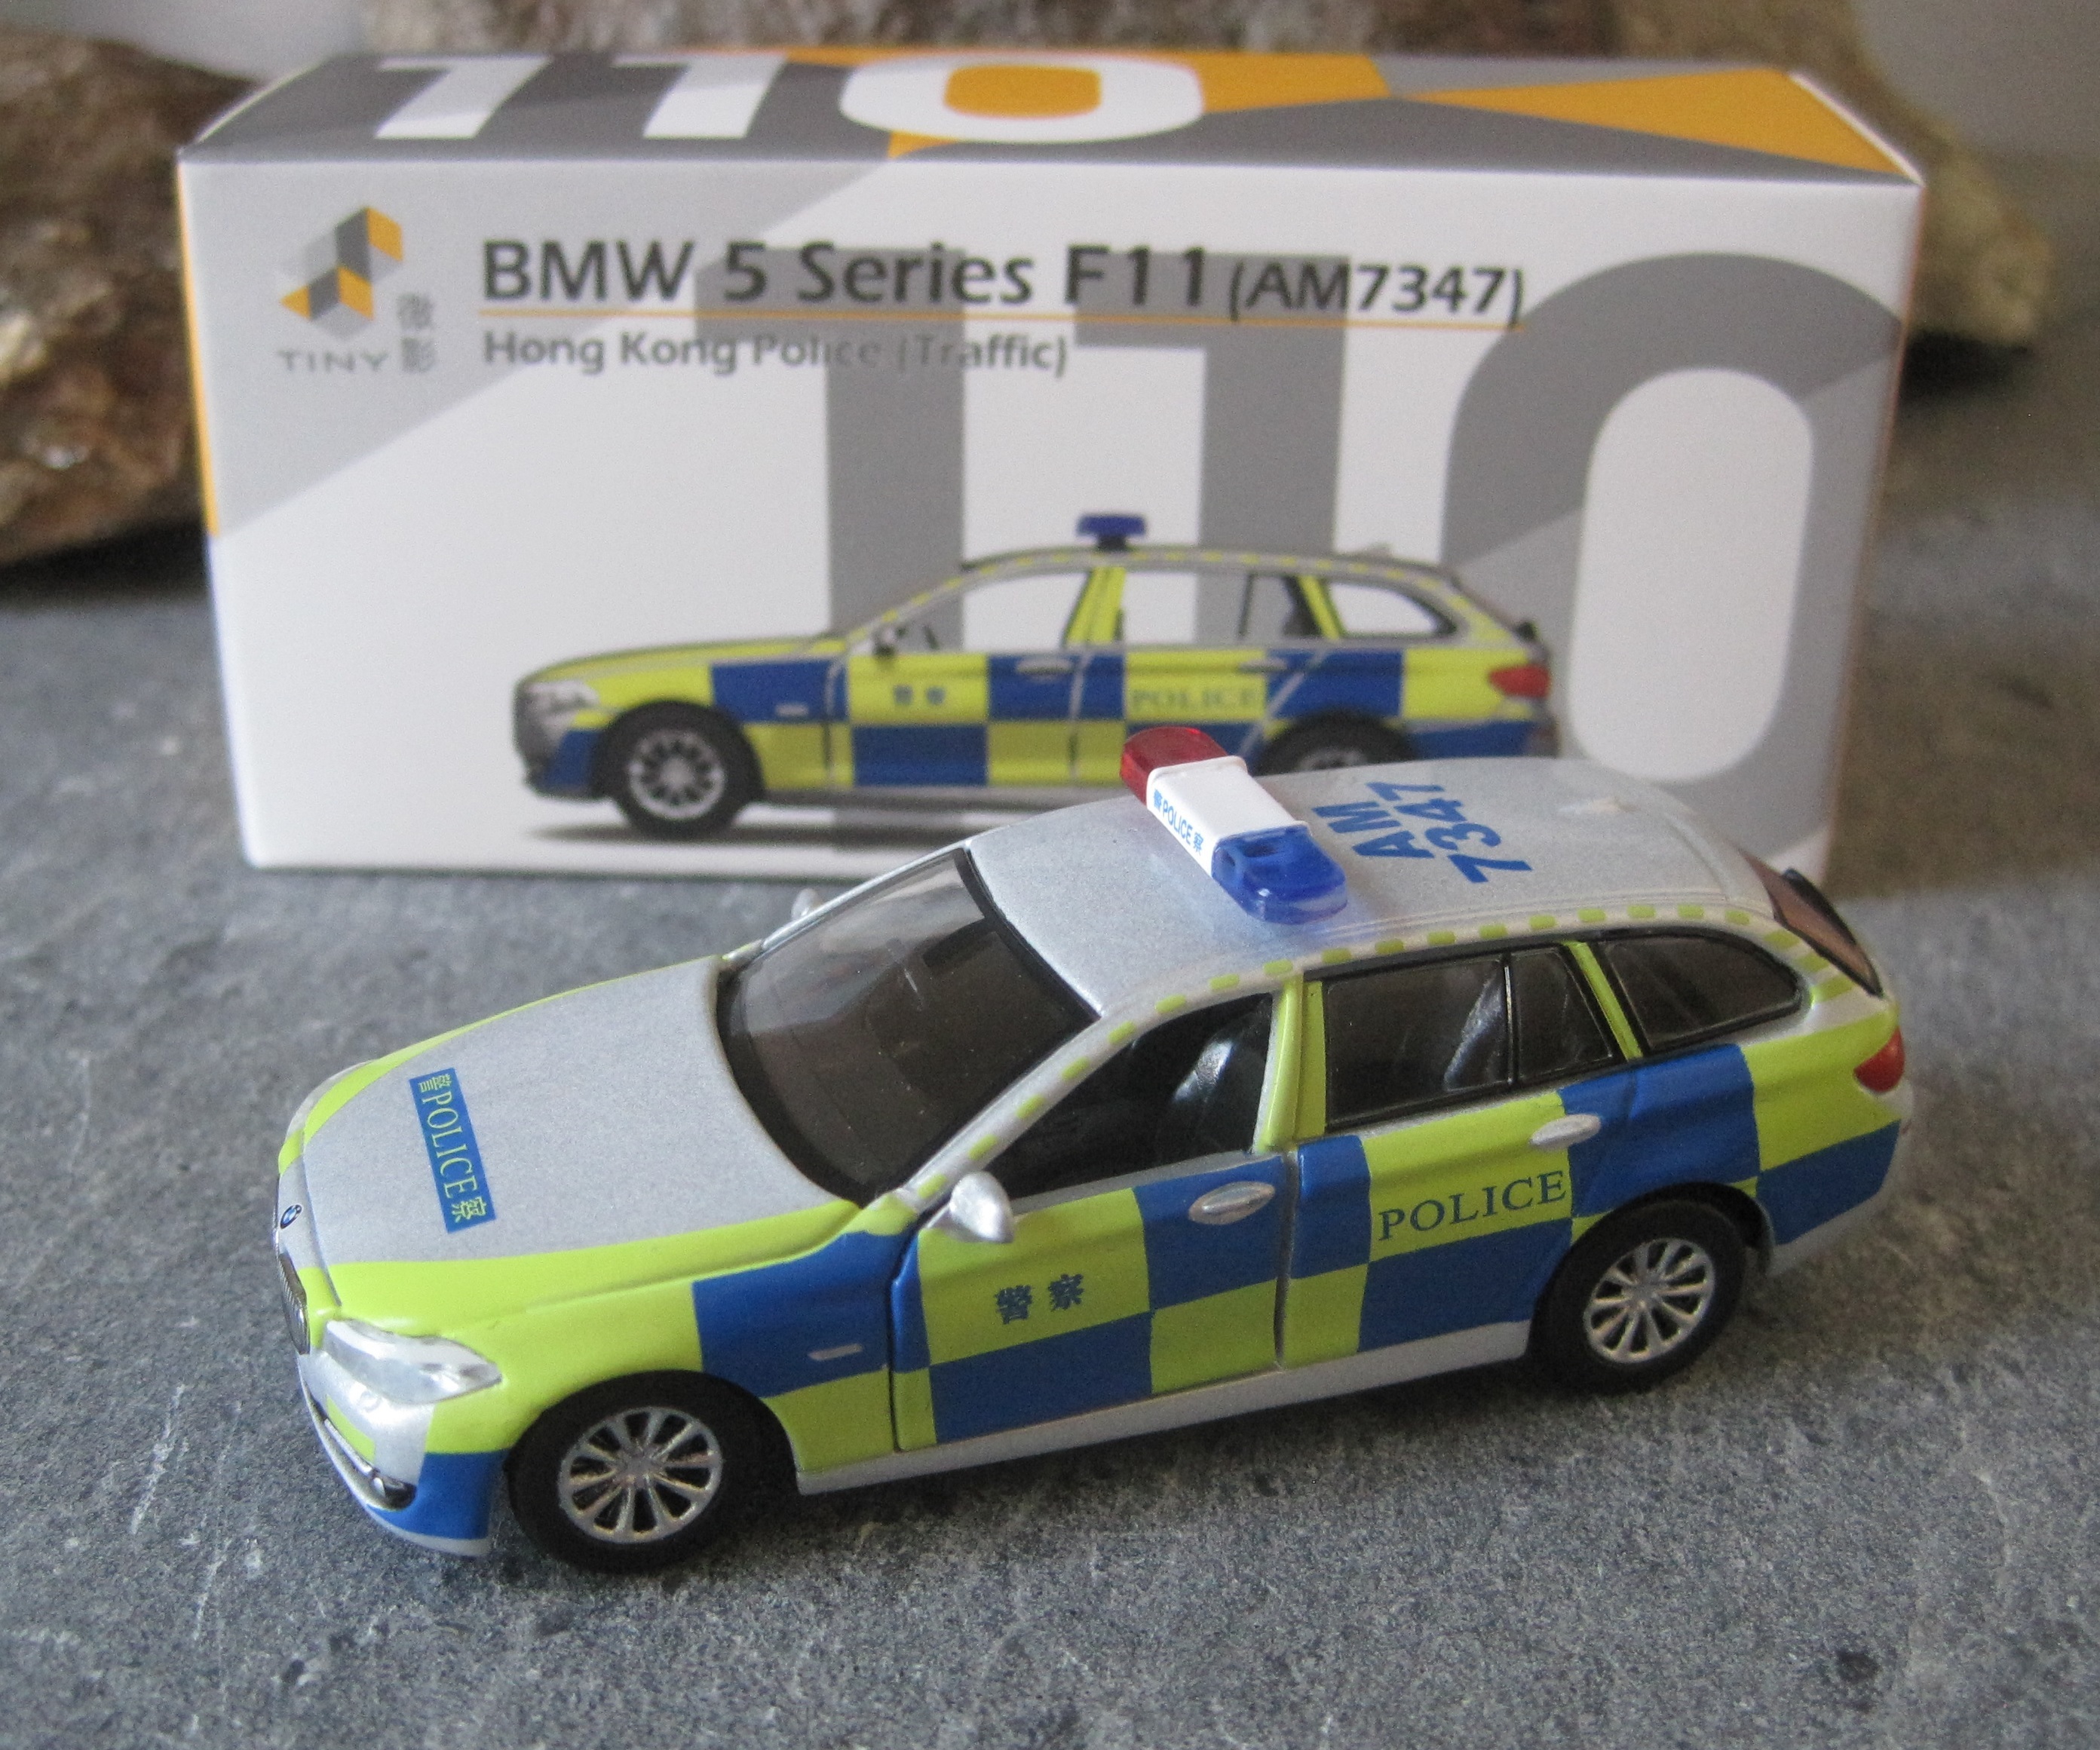 TINY 110 BMW 5 Series F11 HONG KONG POLICE CAR Traffic DIECAST  CITY AM7347 